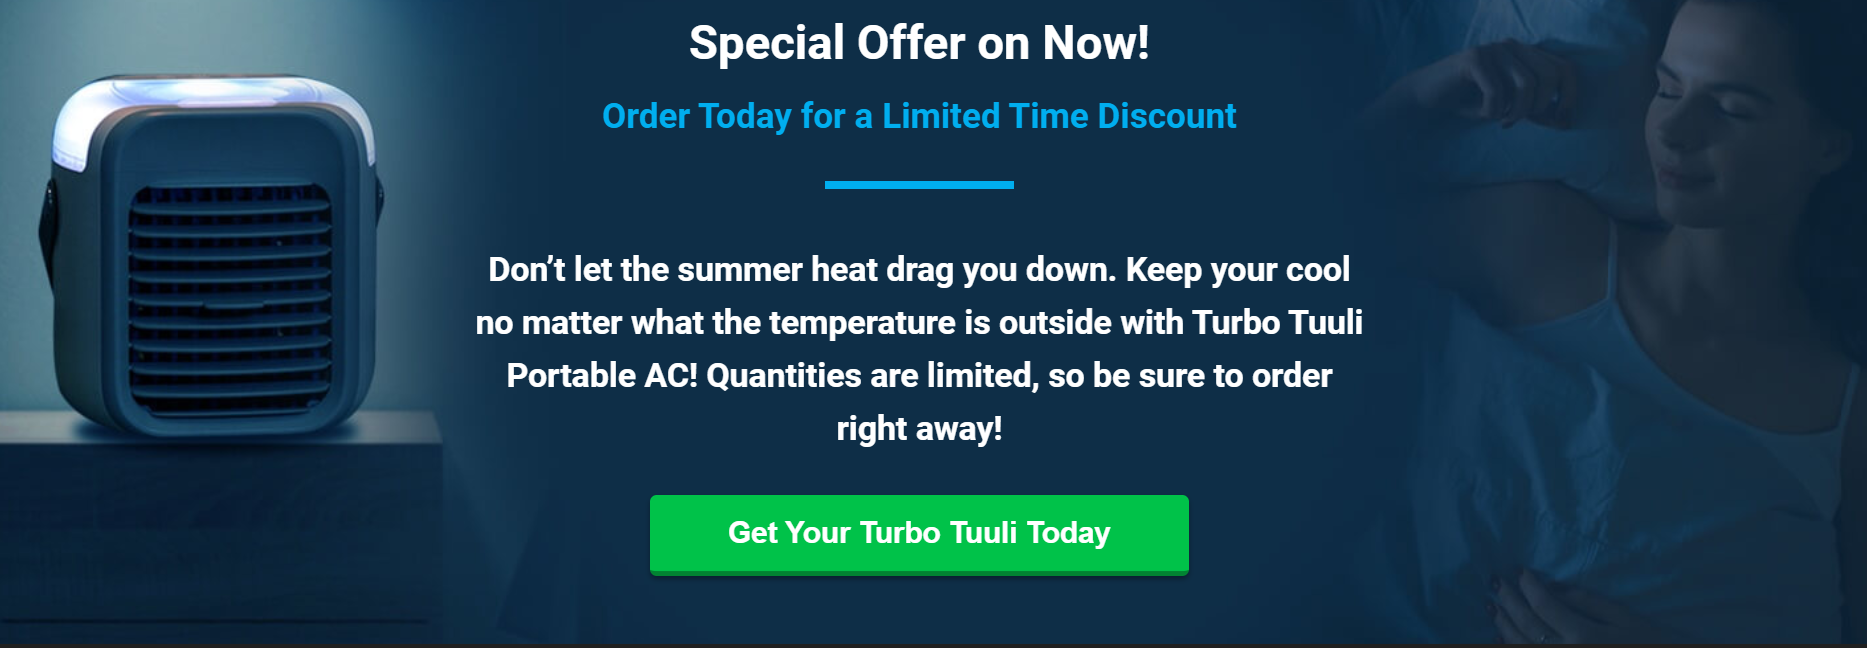 Turbo Tuuli Portable AC